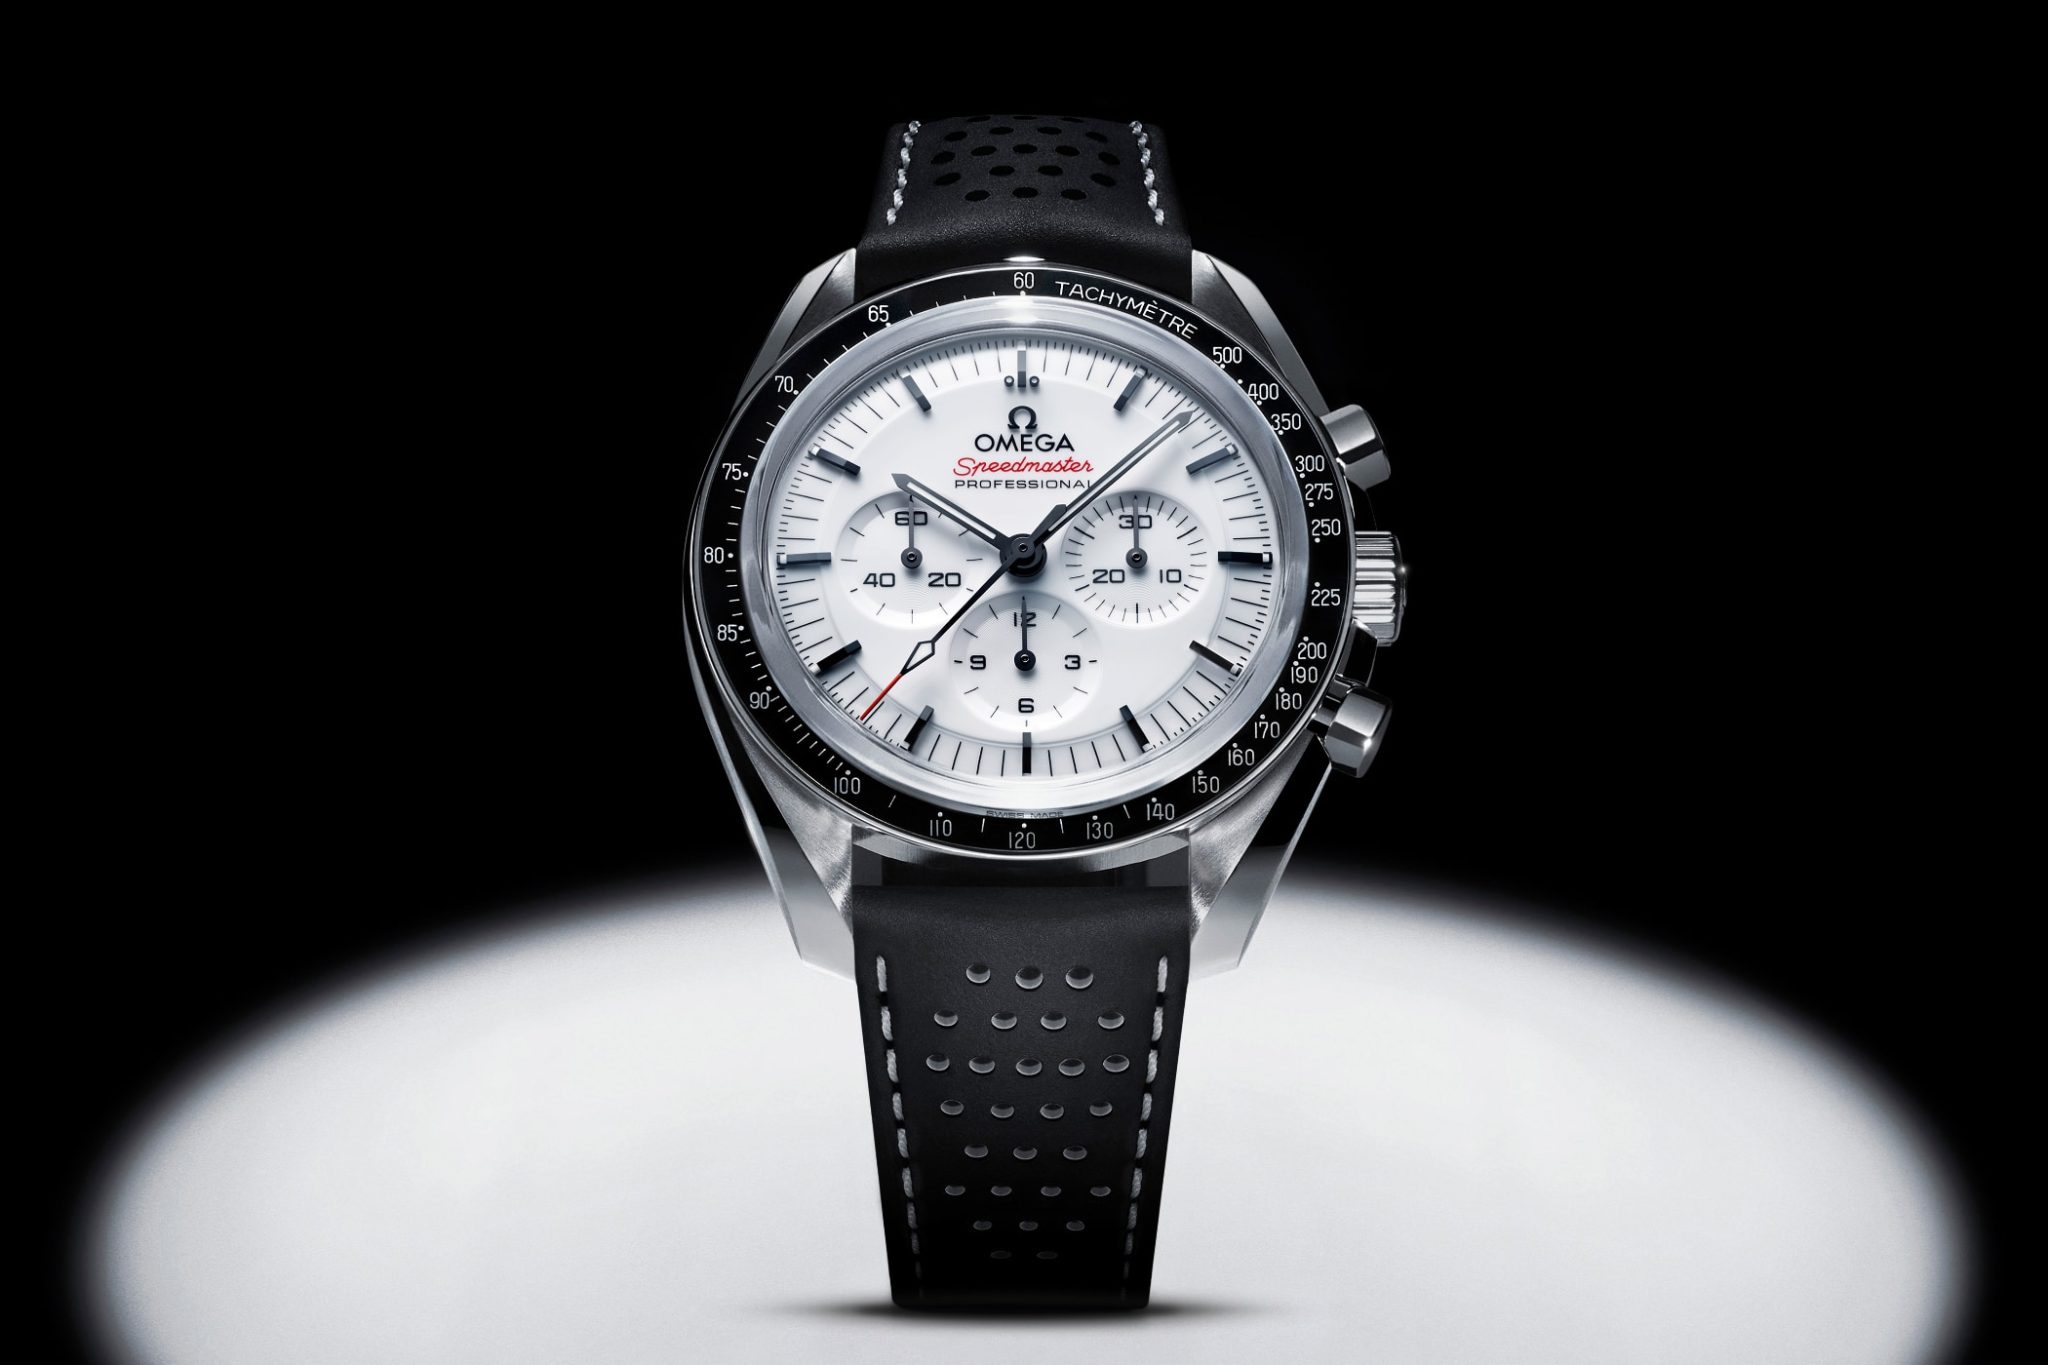 omega-speedmaster-professional-moonwatch-white-dial-310.30.42.50.04.002-lederband